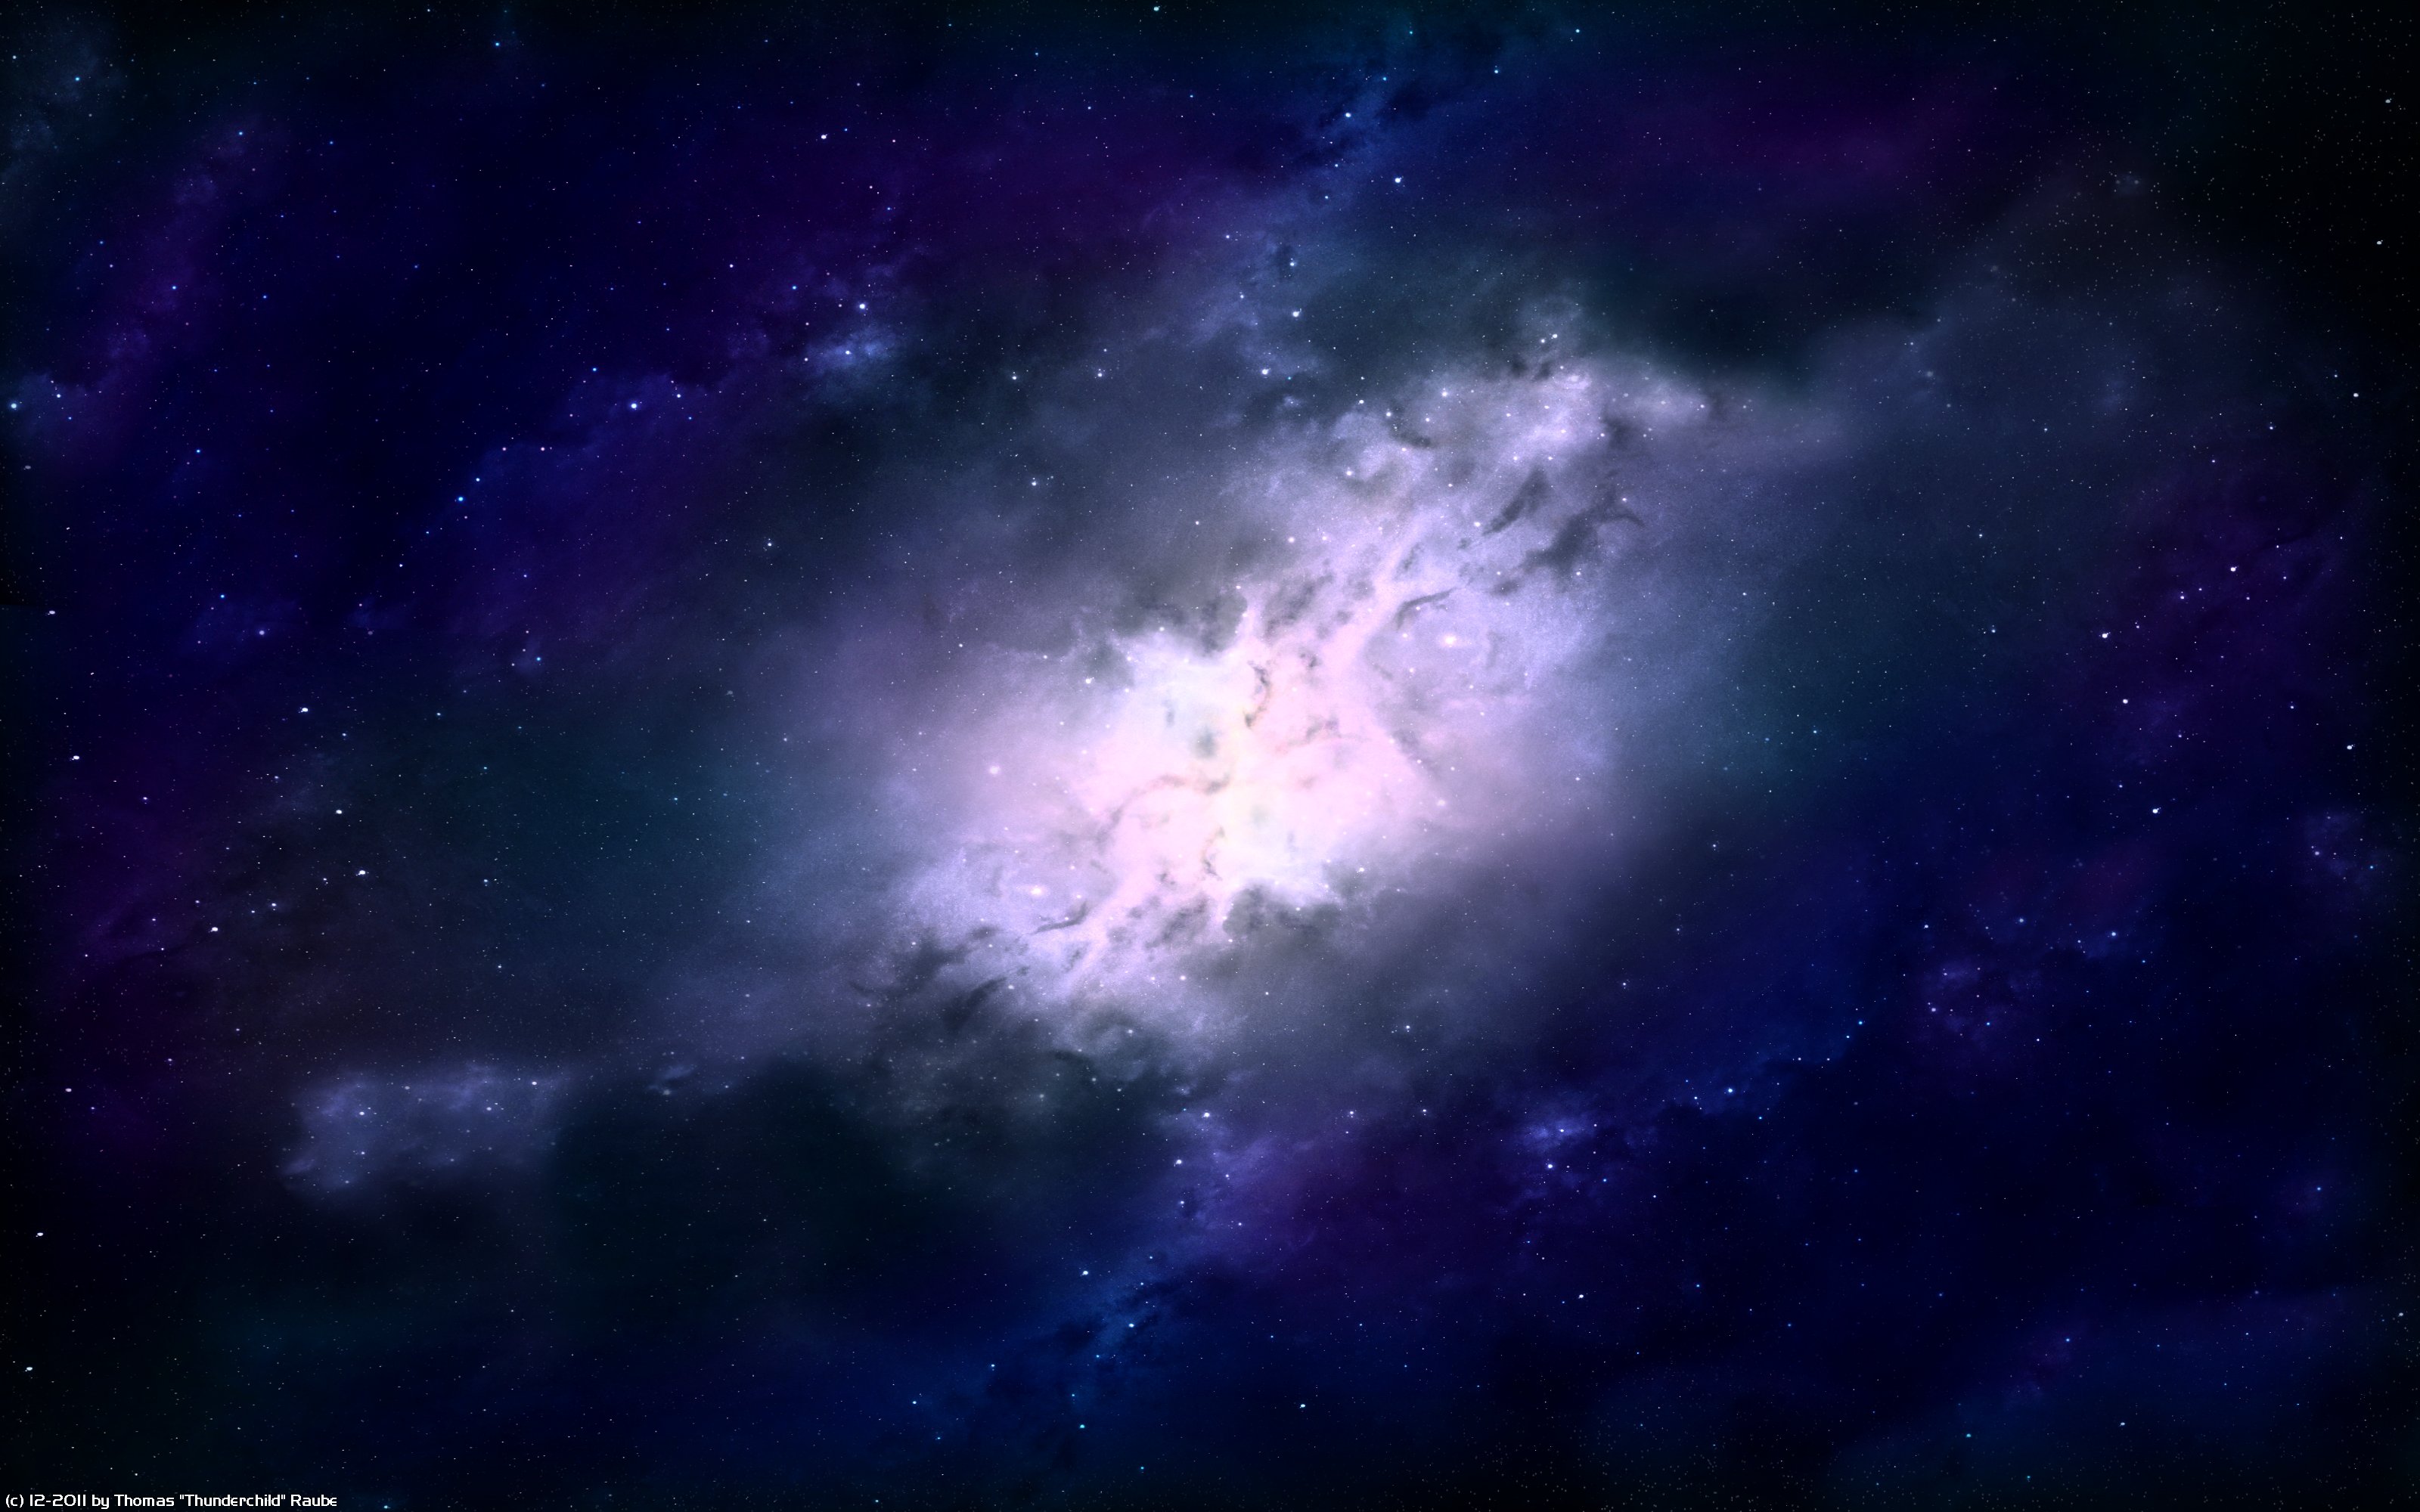 Centre Nebula